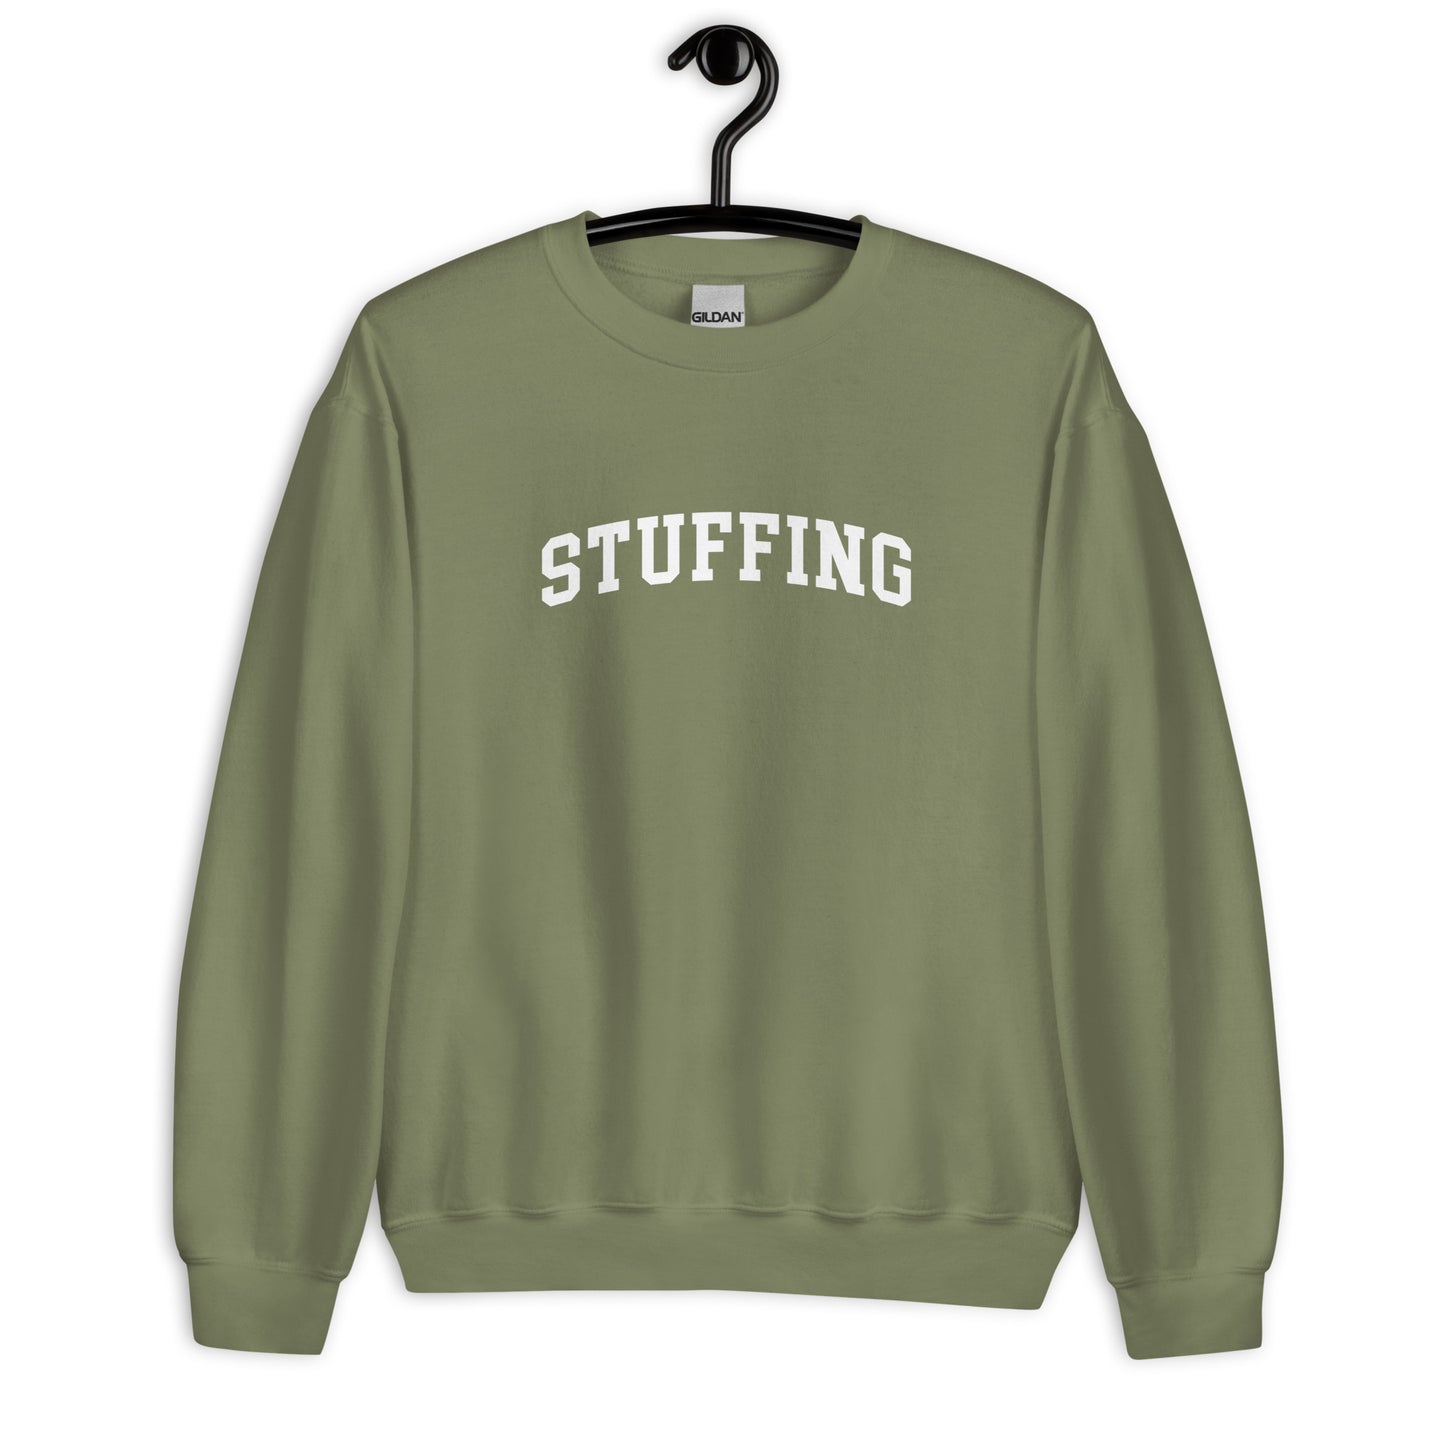 Stuffing Sweatshirt - Arched Font